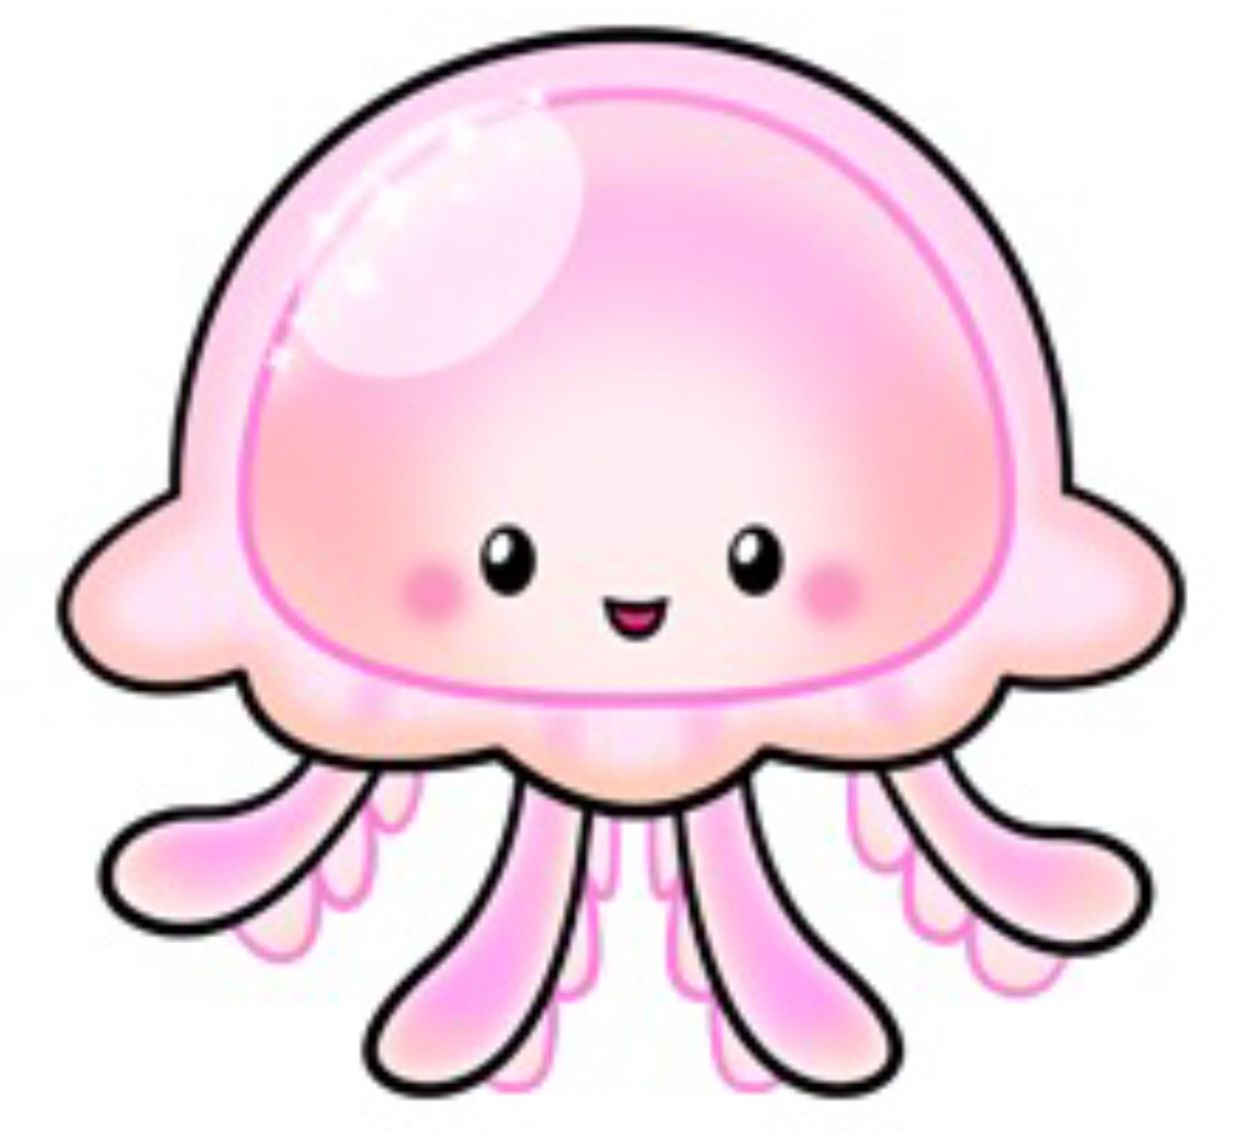 Jellyfish kawaii drawings.